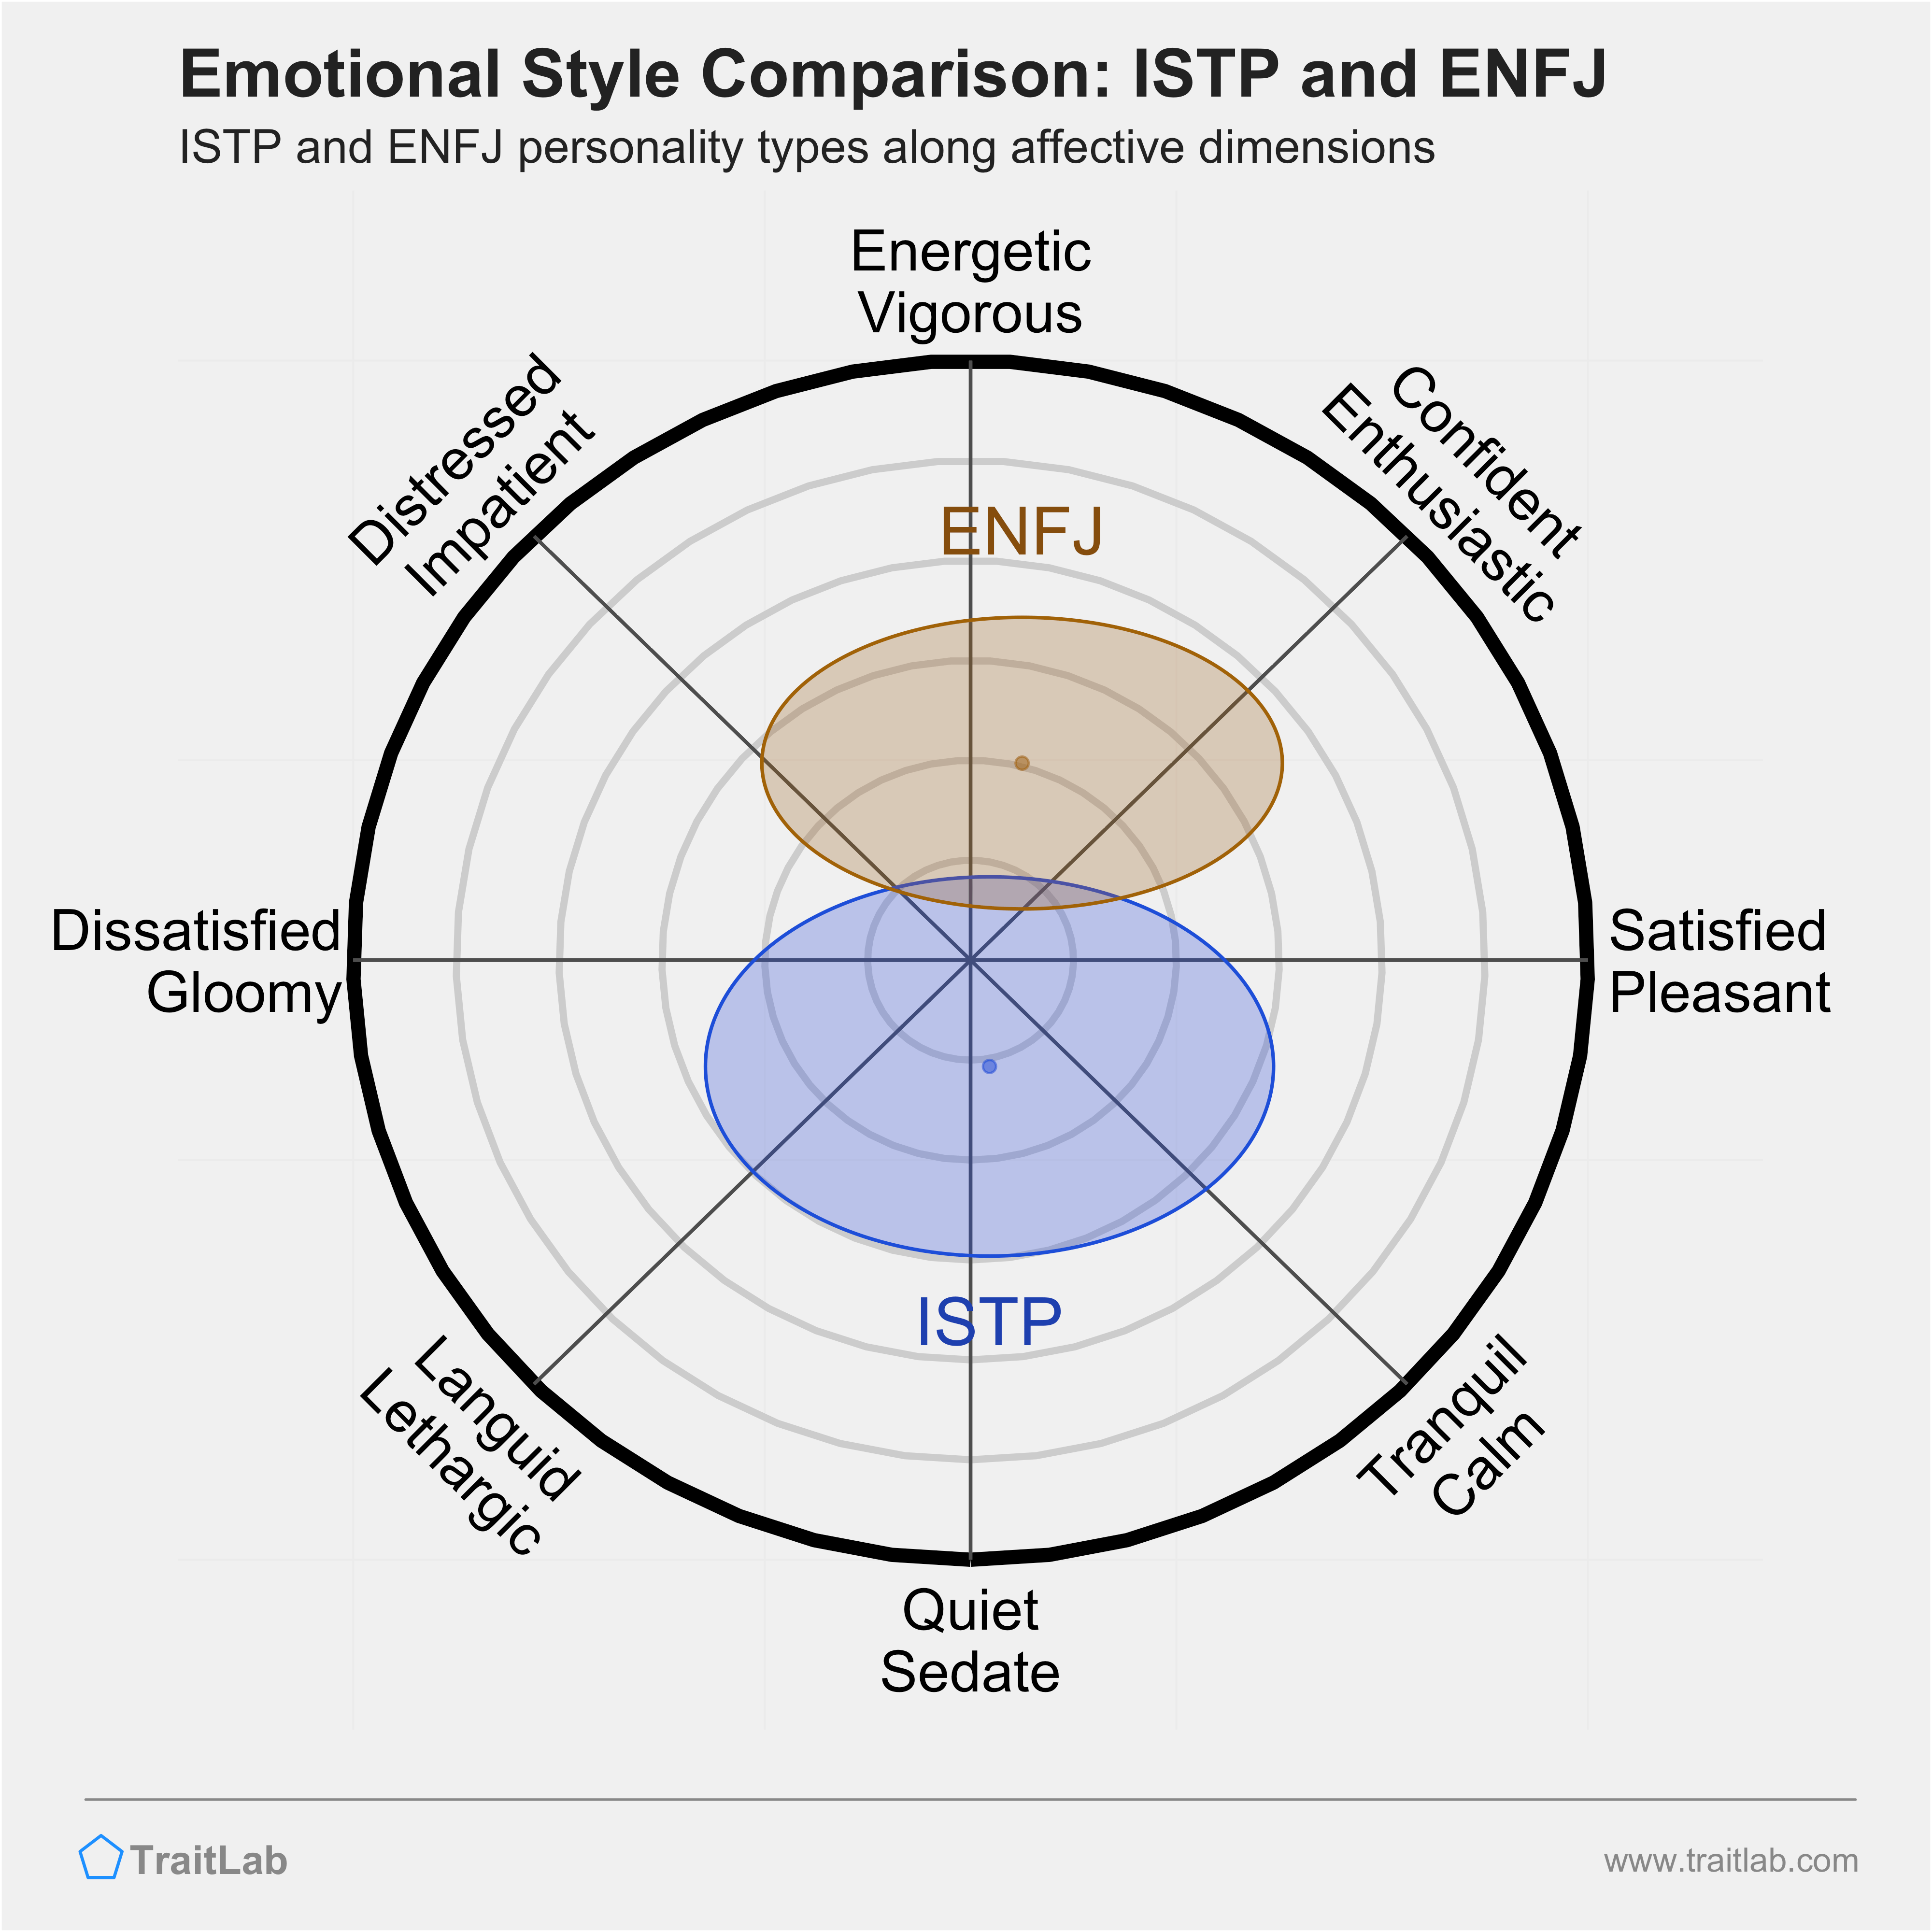 ISTP and ENFJ comparison across emotional (affective) dimensions